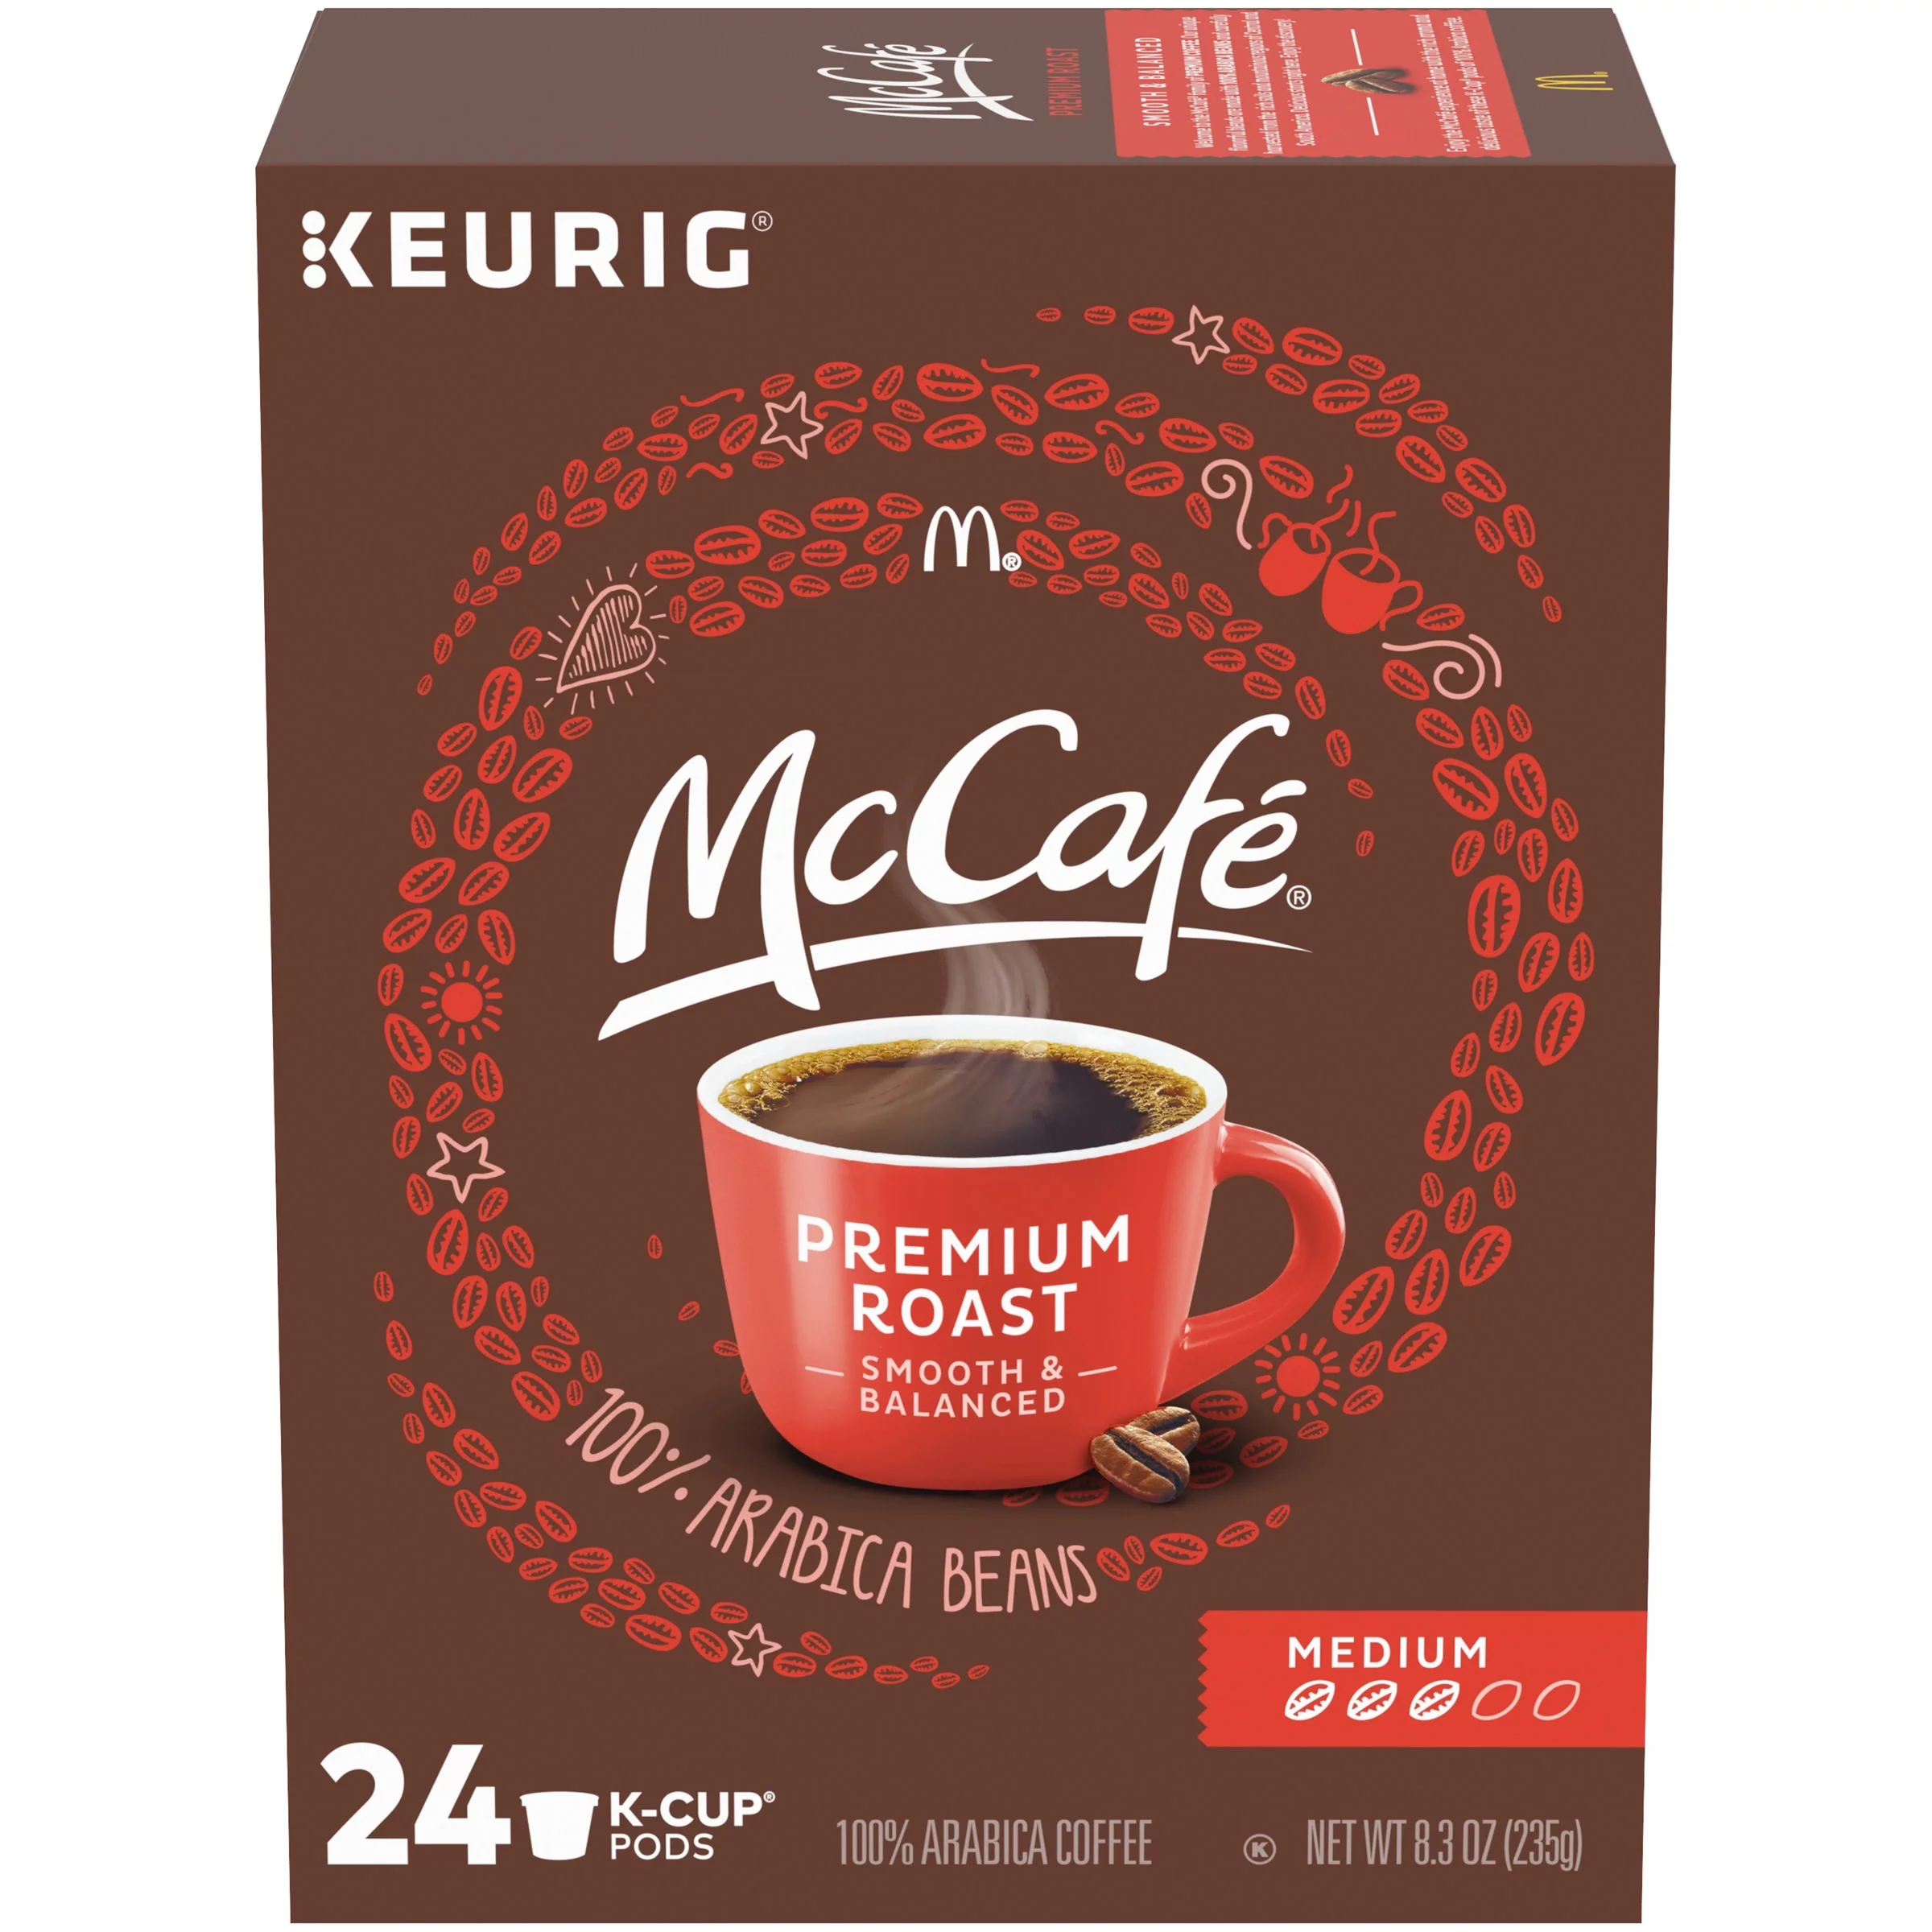 McCafe Premium Roast Medium Coffee K-Cup Pods, Caffeinated, 24 ct - 8.3 oz Box